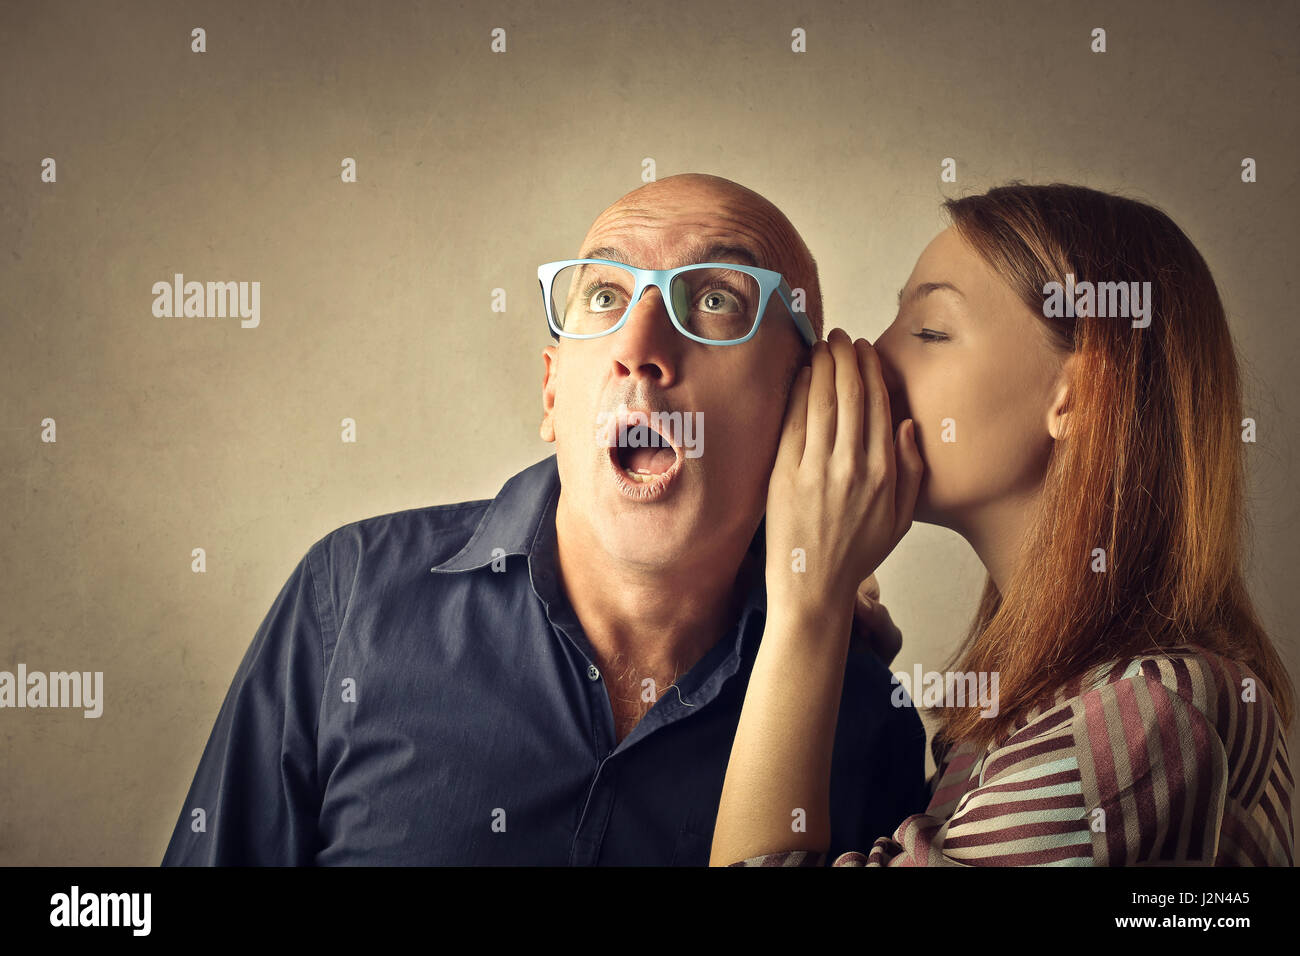 Woman whispering to bald man Stock Photo